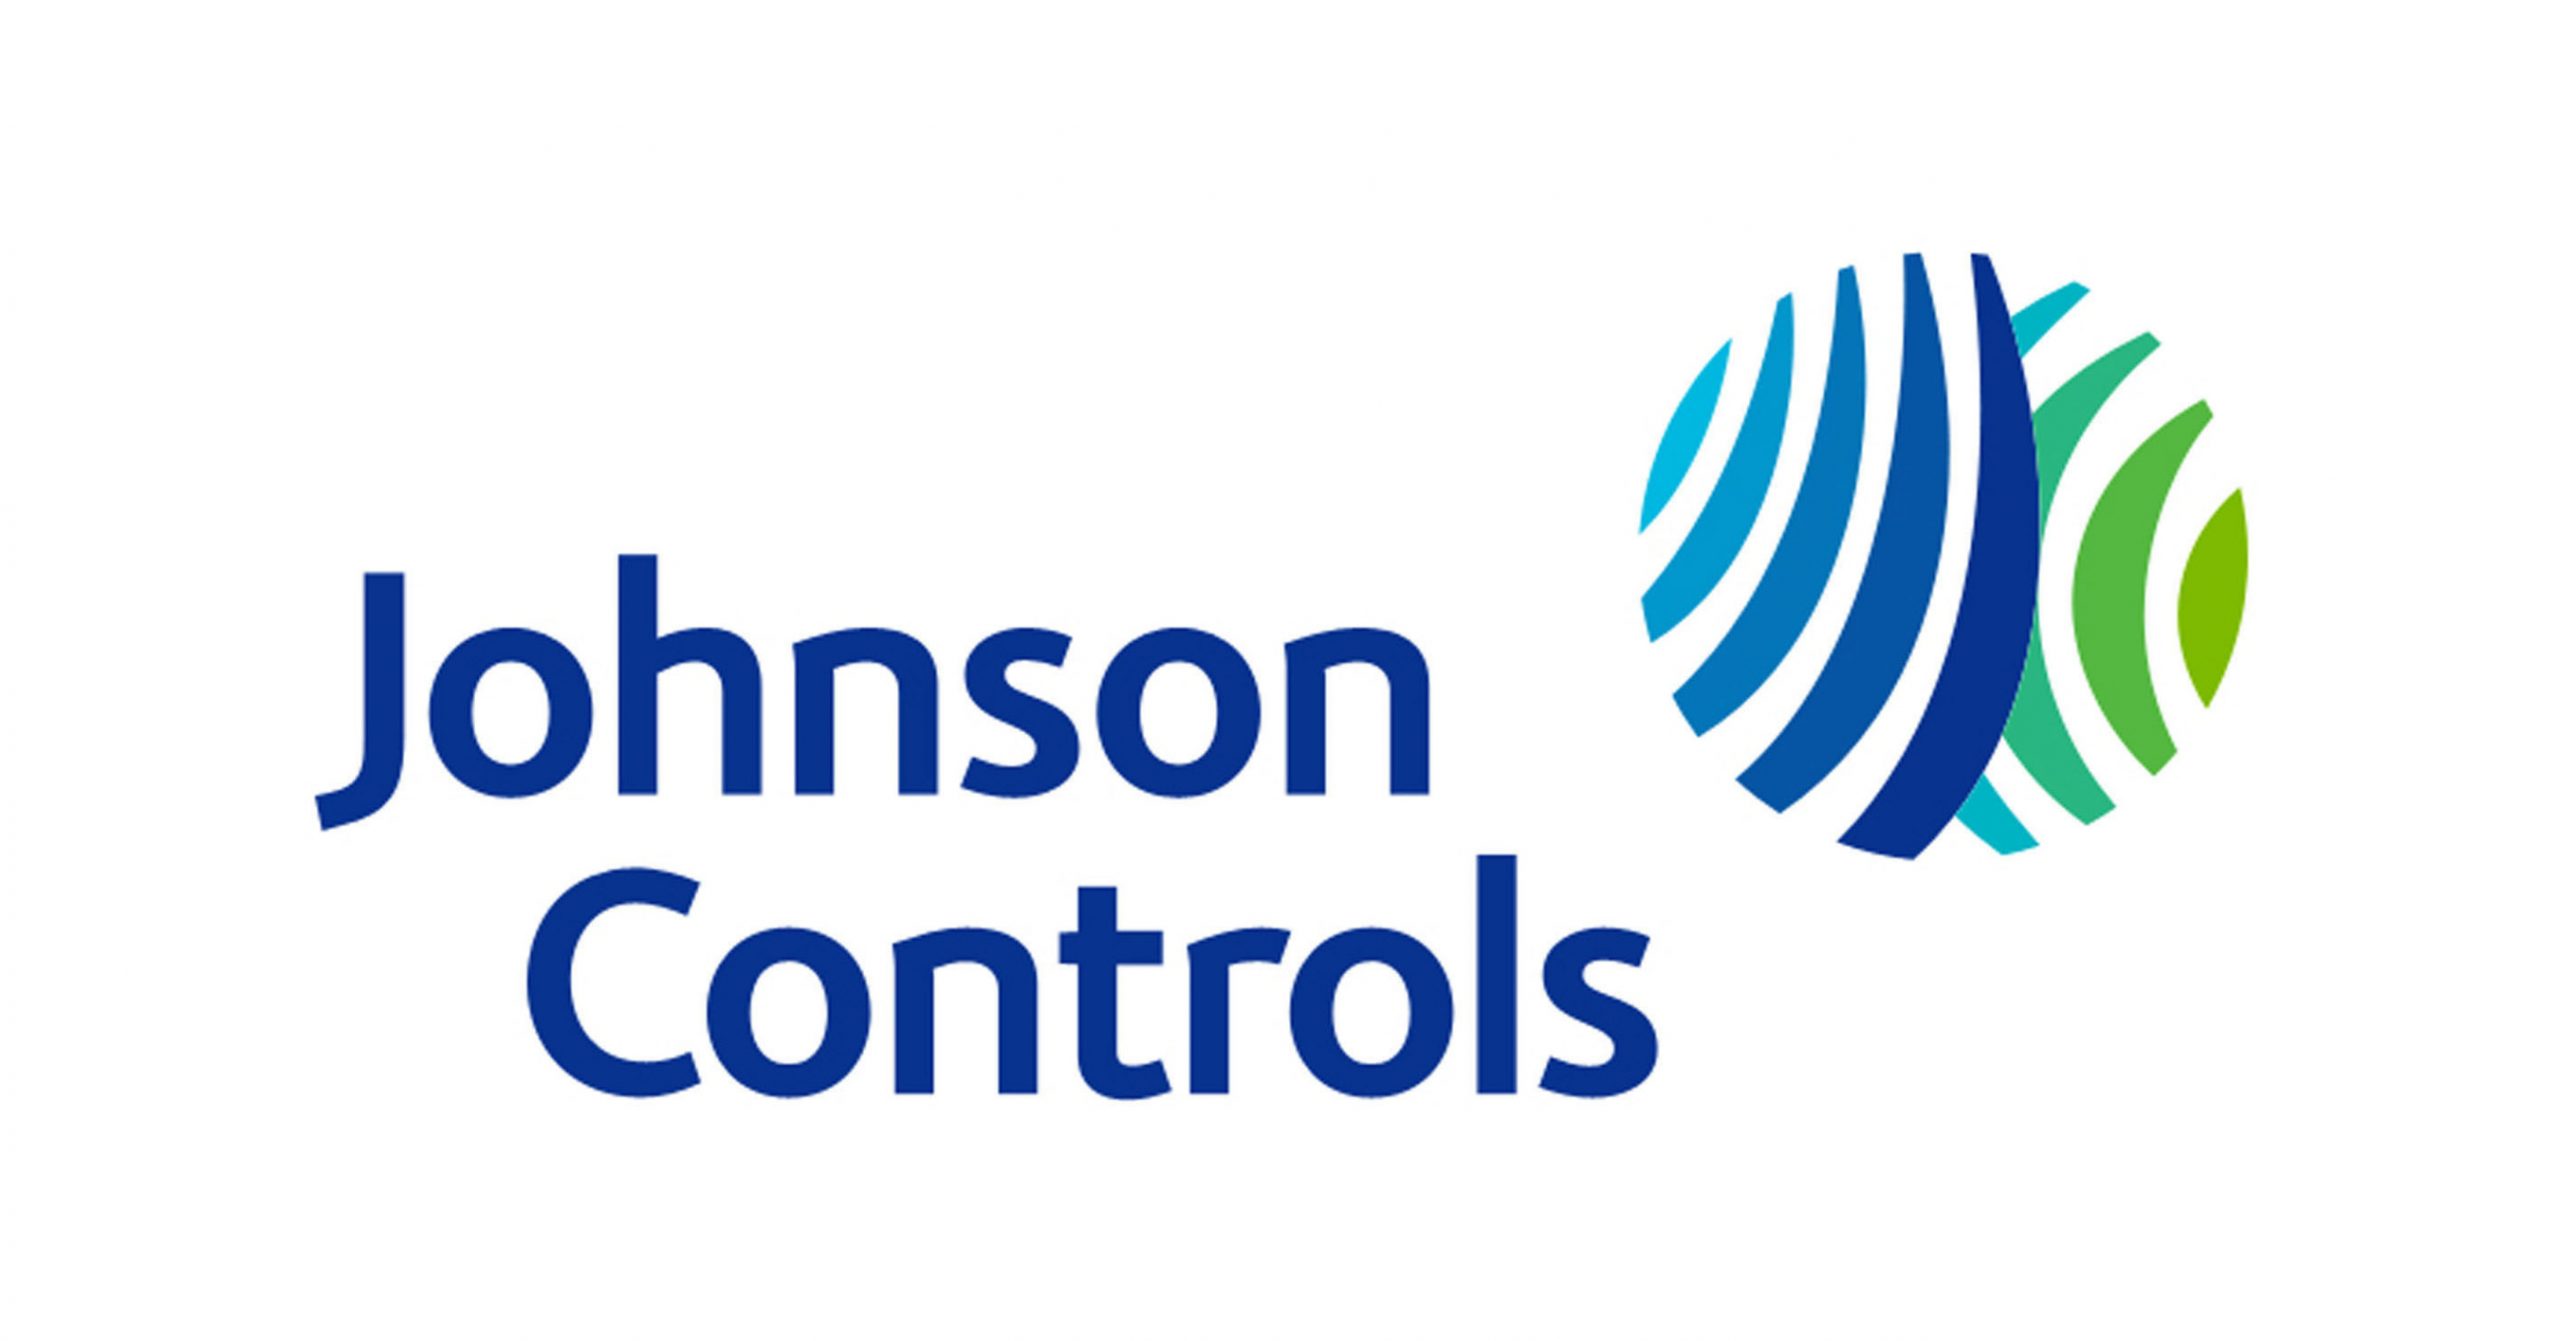 Johnson Controls Logo. (PRNewsFoto/JOHNSON CONTROLS, INC.) (PRNewsFoto/)